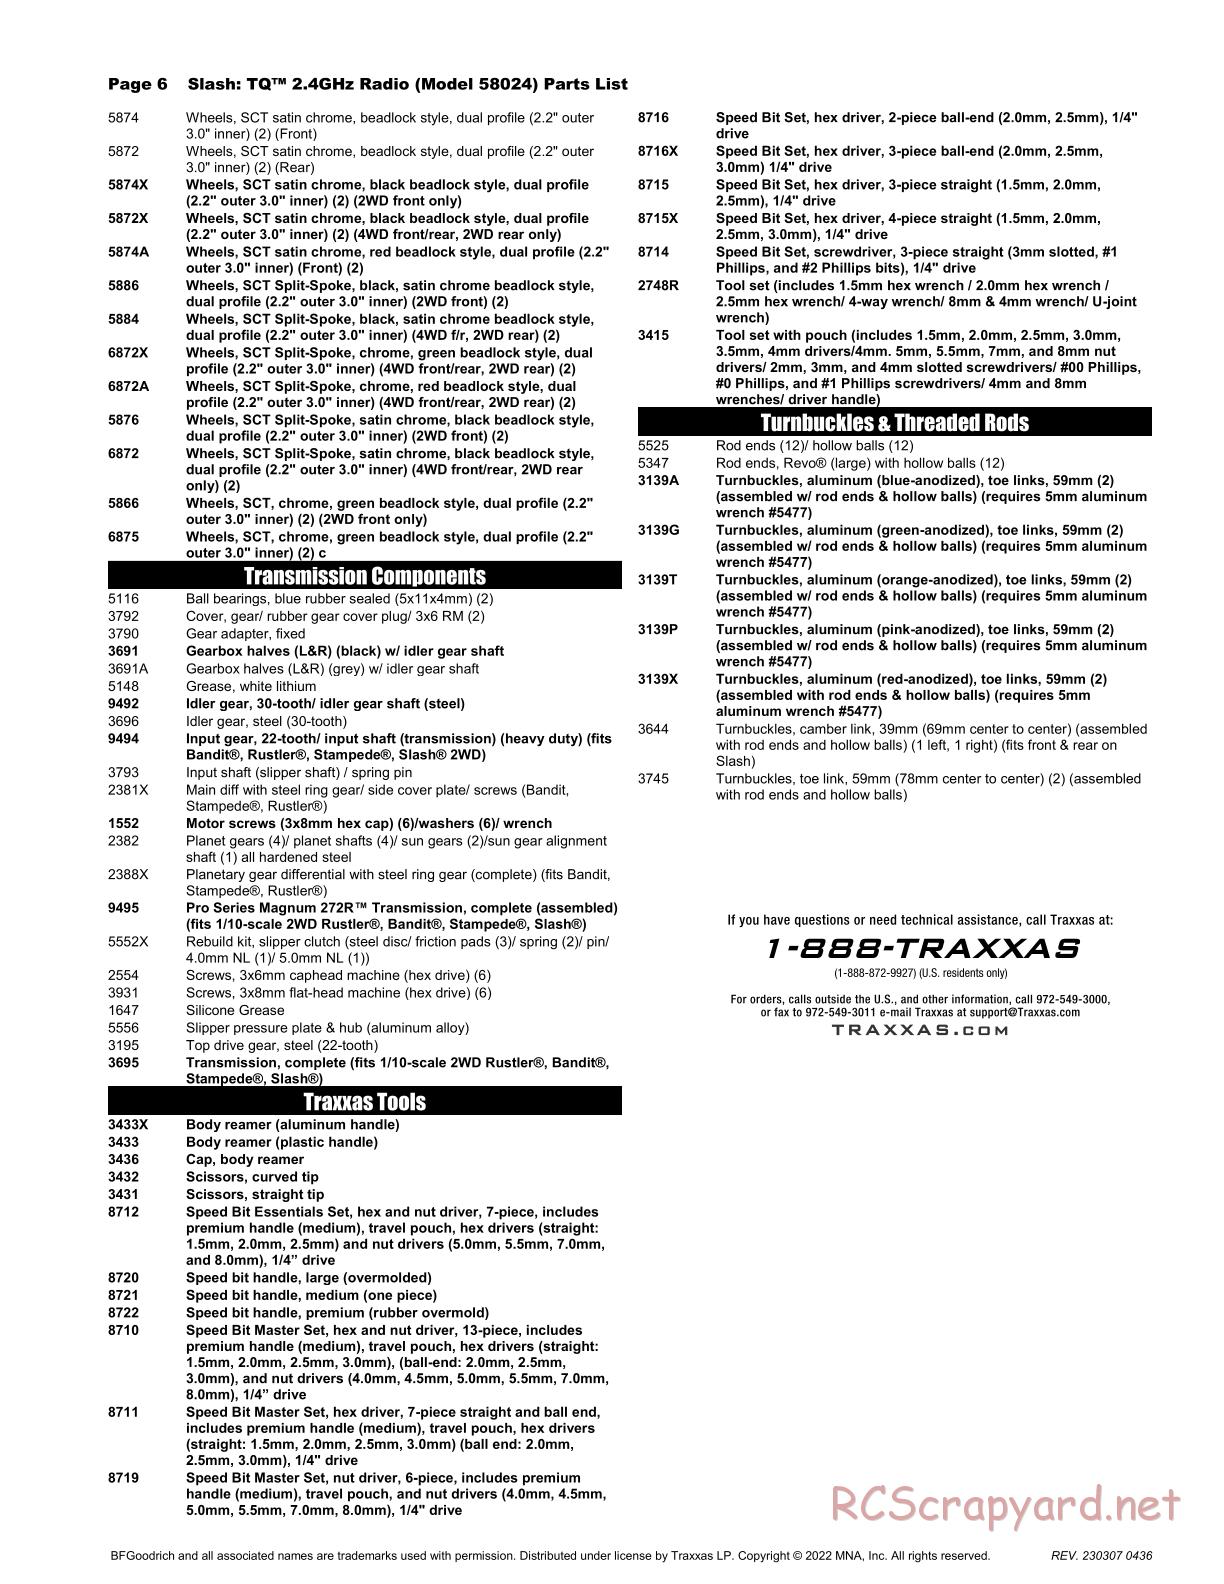 Traxxas - Slash 2WD (2012) - Parts List - Page 6